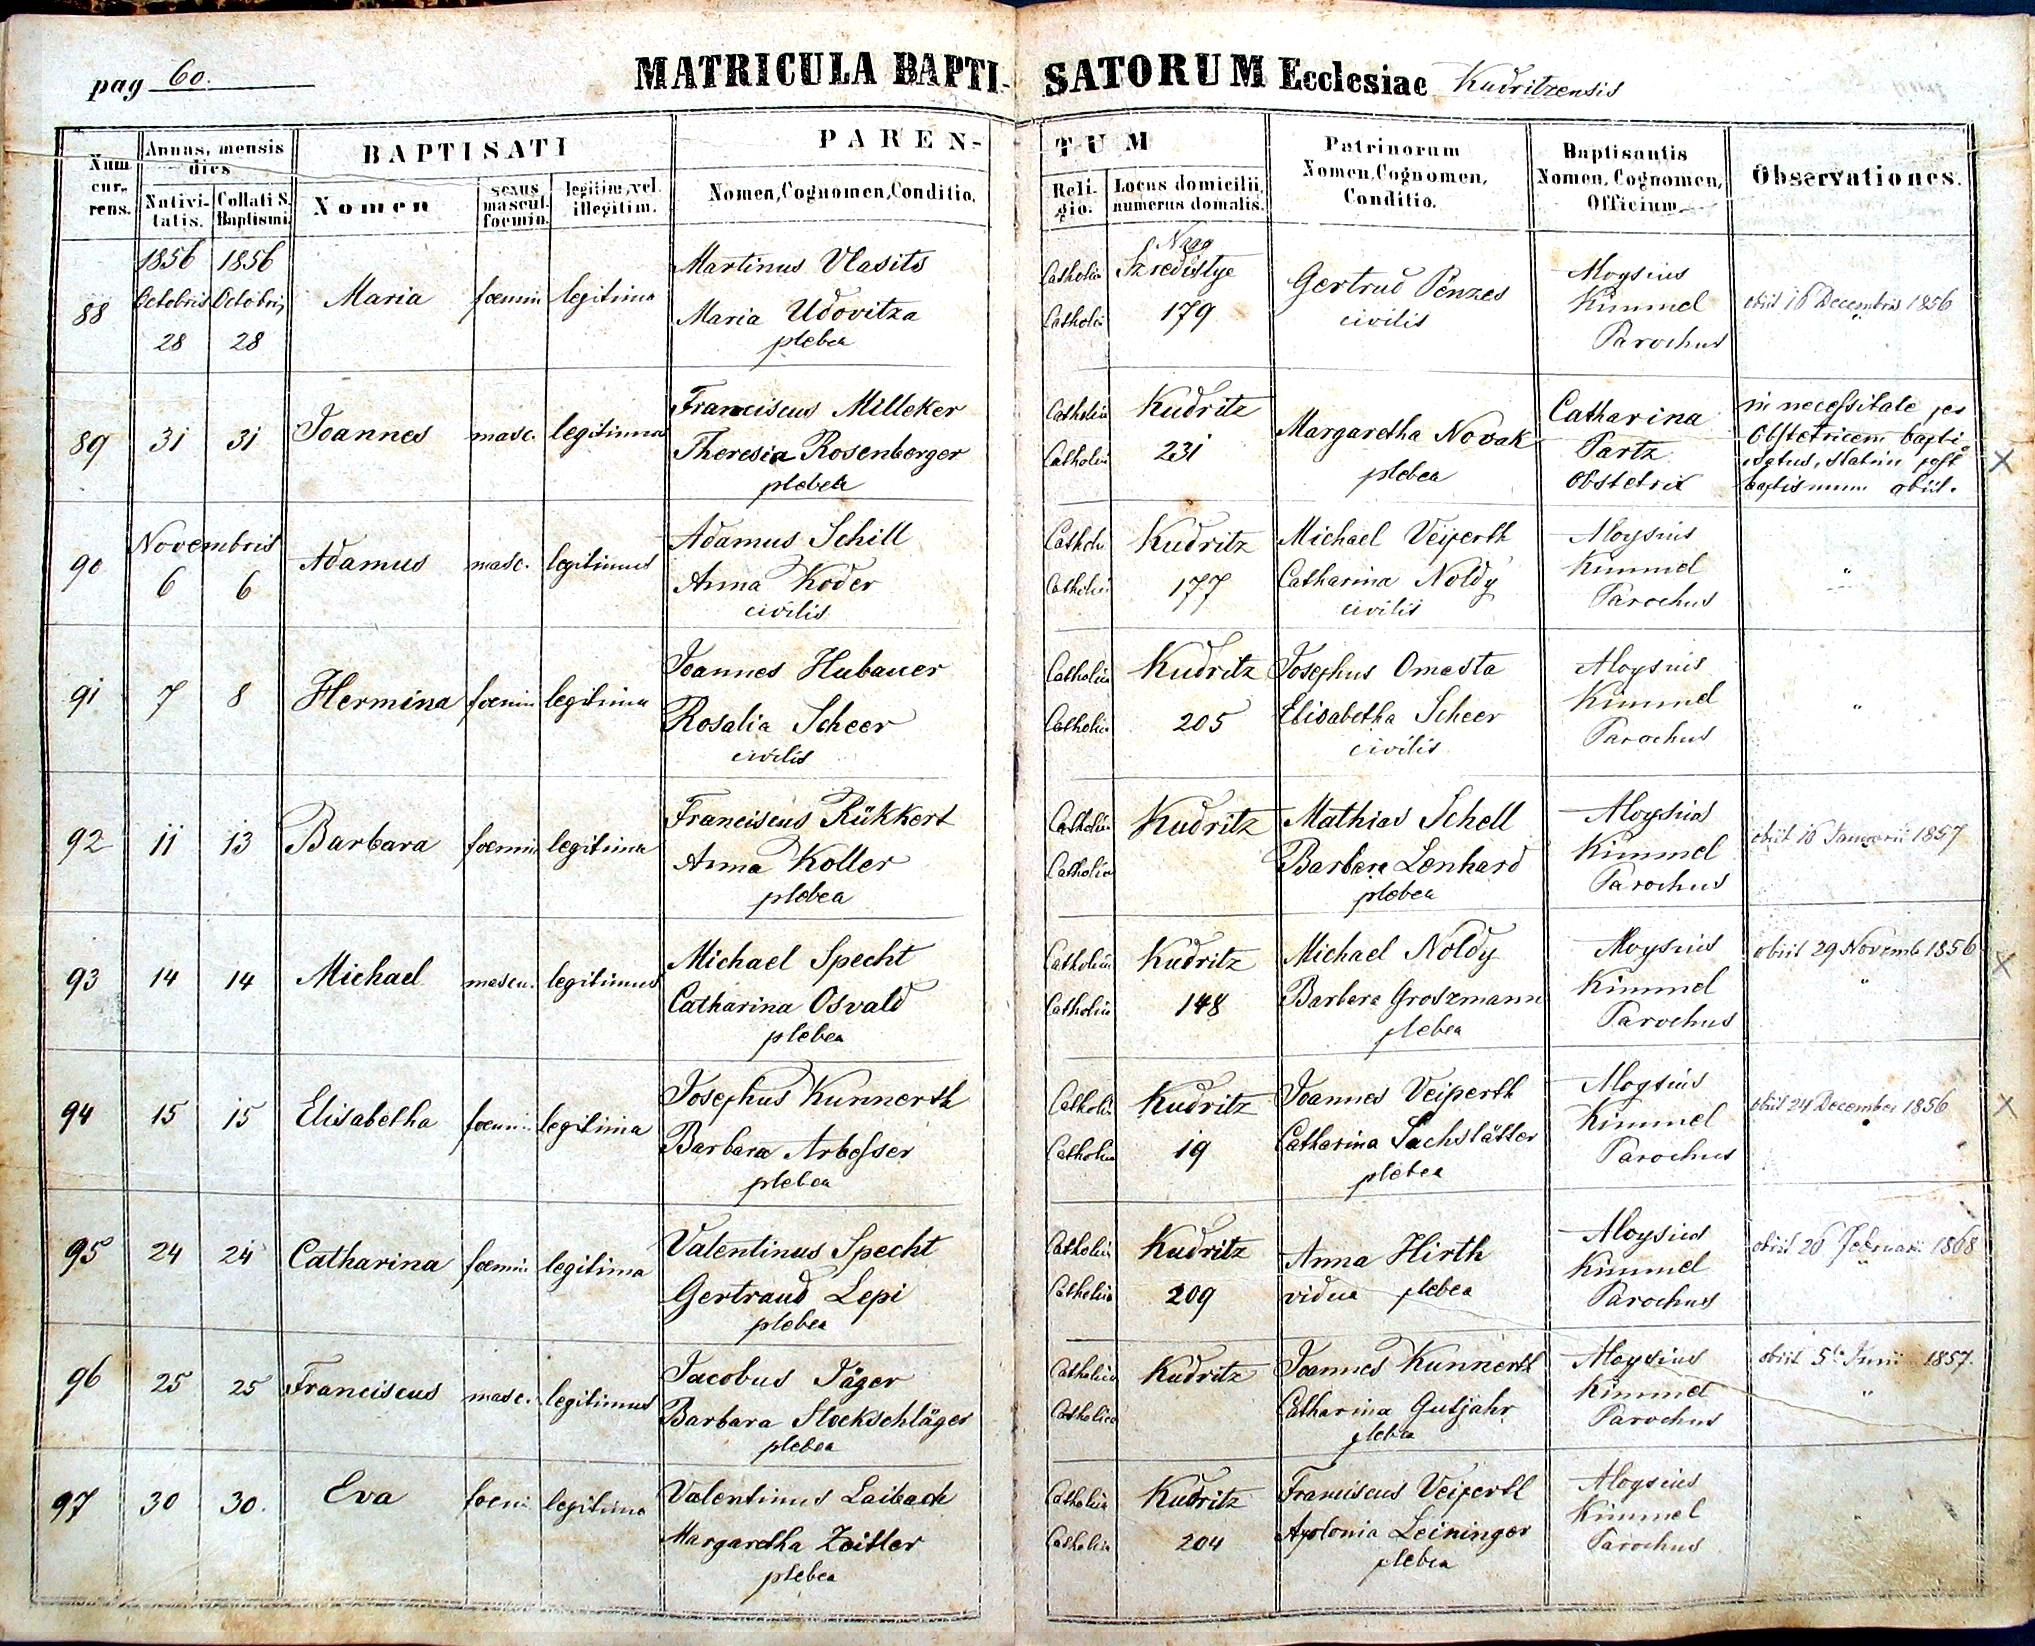 images/church_records/BIRTHS/1852-1870B/060